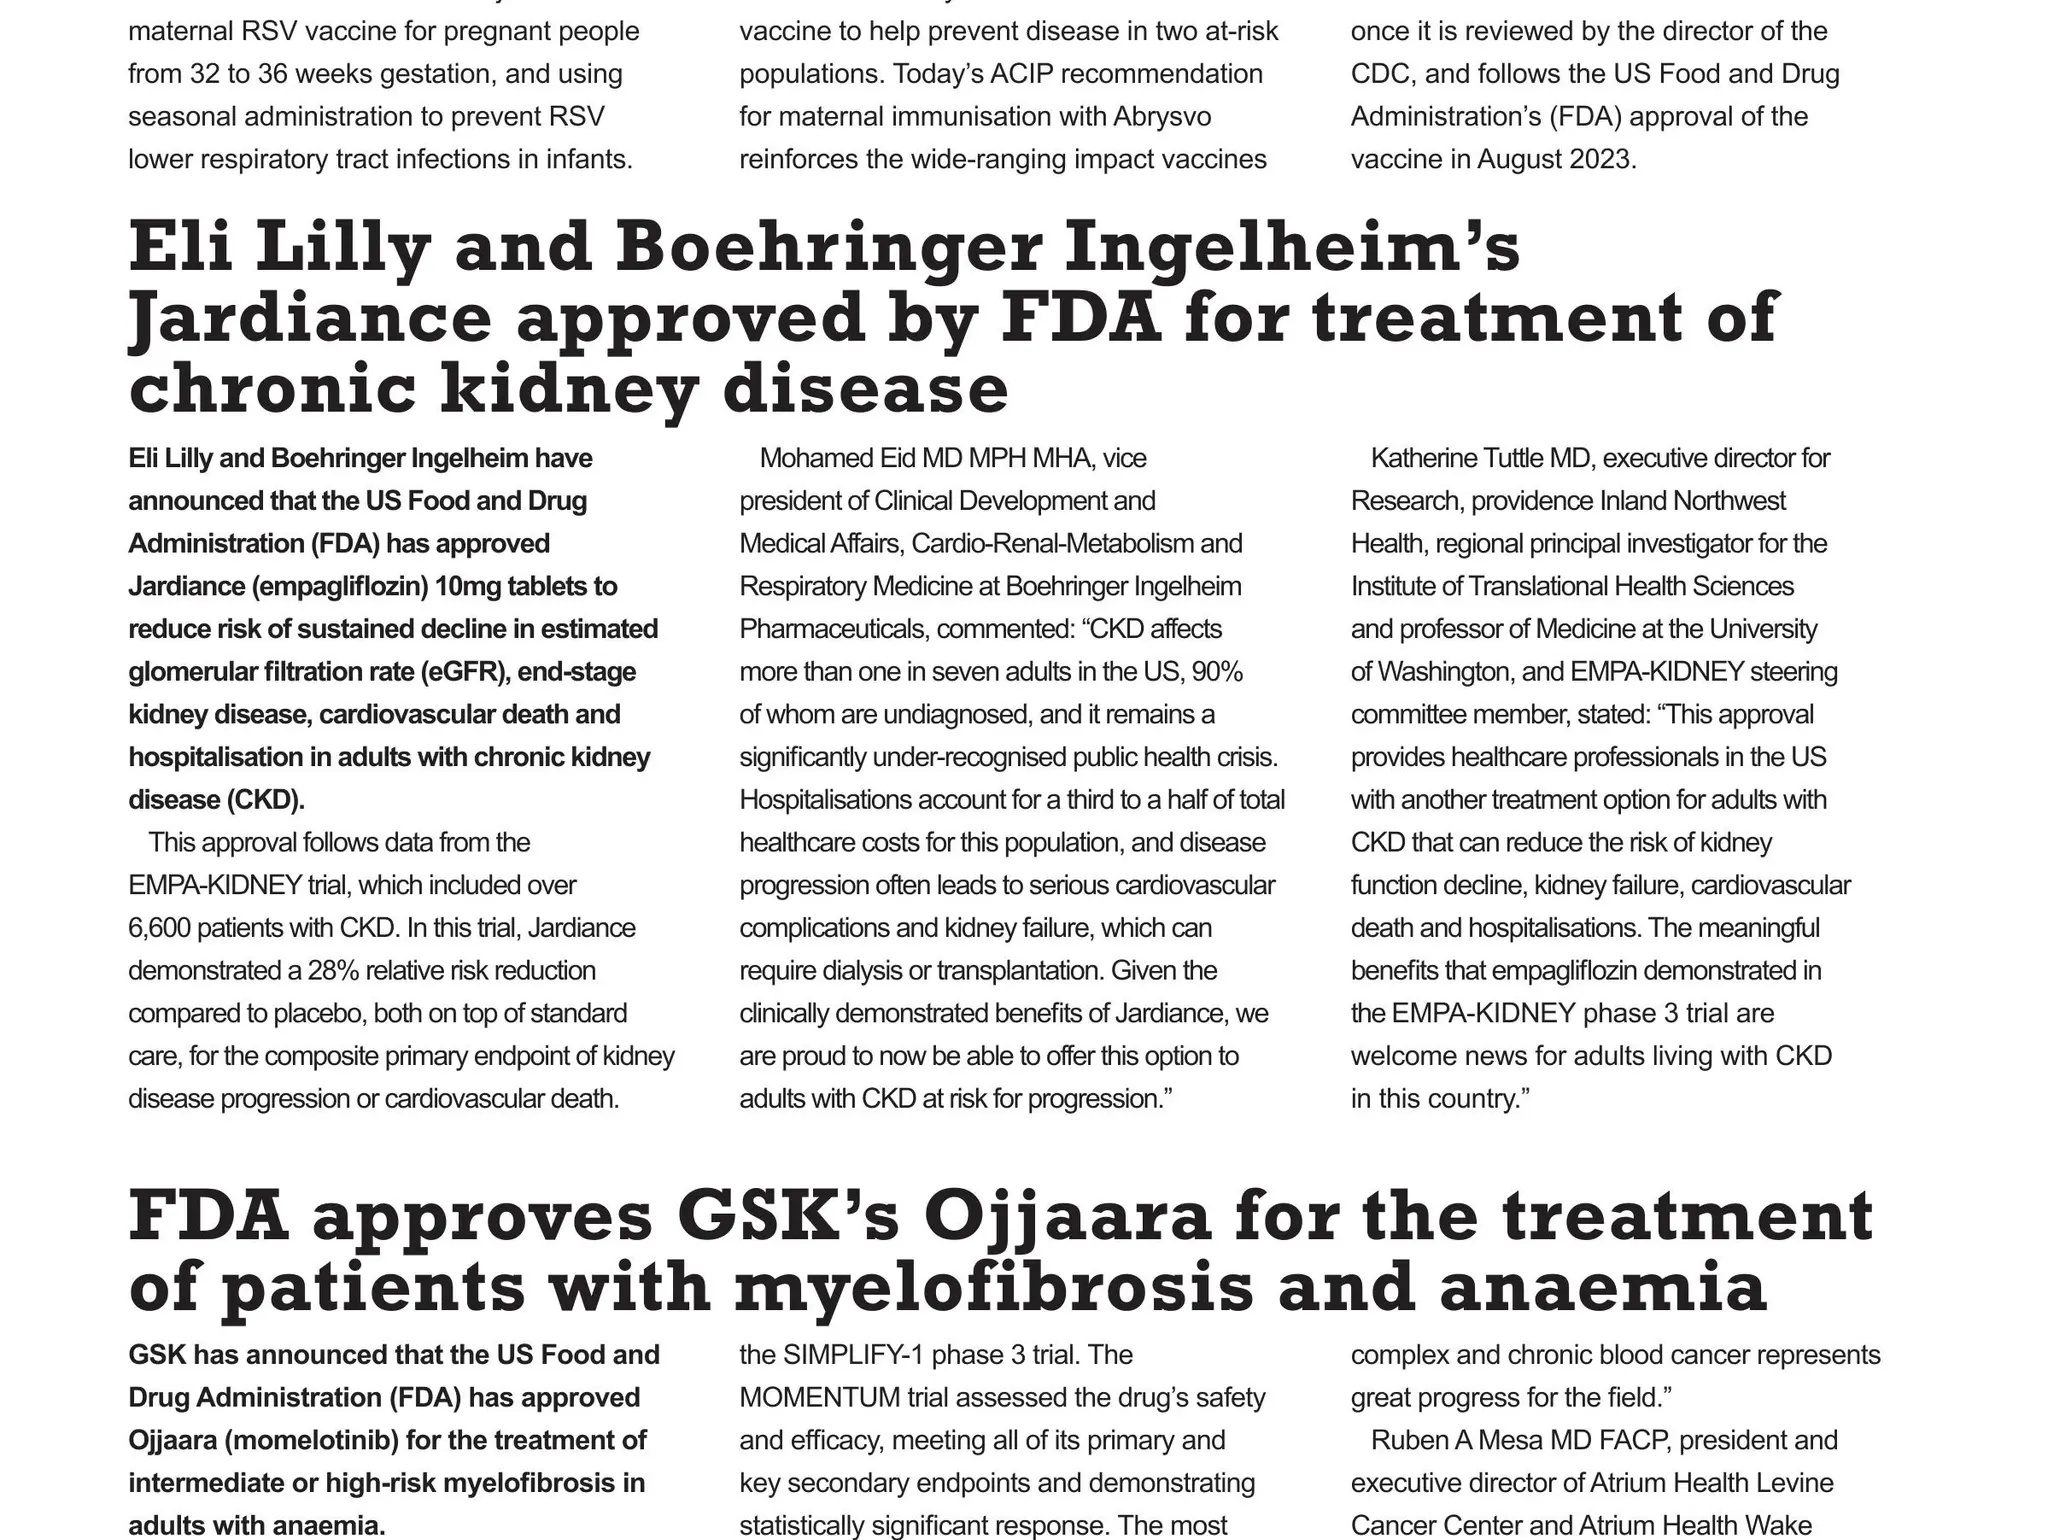 Eli Lilly & Boehringer Ingelheim’s Jardiance approved by FDA for treatment of chronic kidney disease